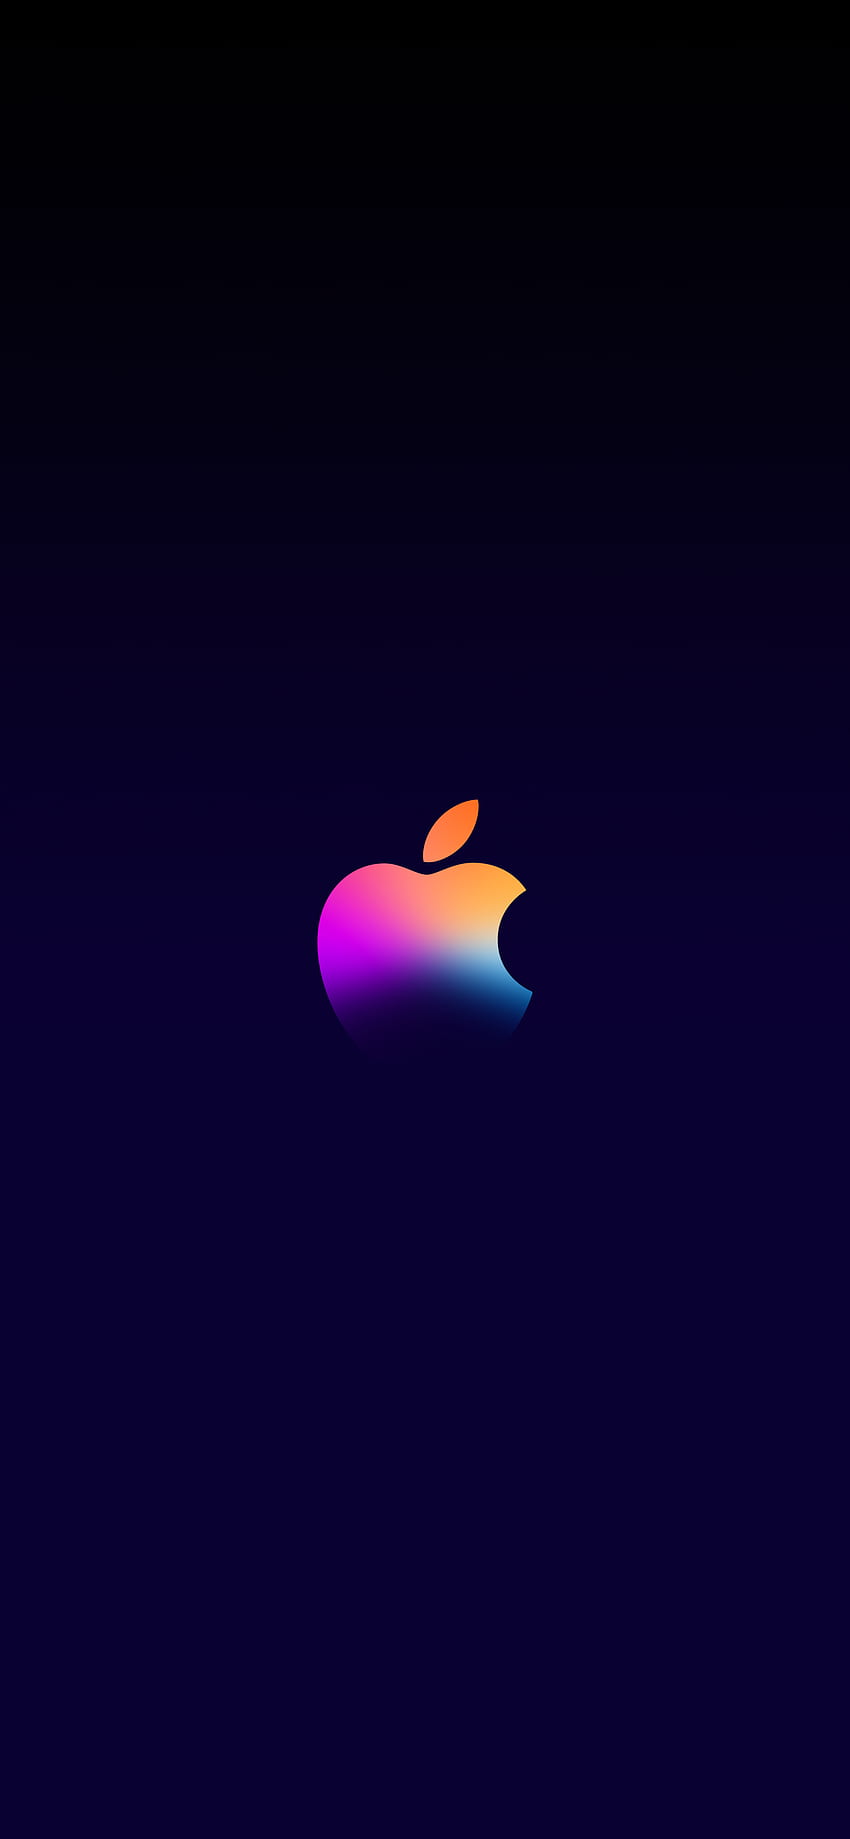 Apple Event One More Thing - Central en 2021. Apple logo iphone, Apple iphone y Apple fondo de pantalla del teléfono